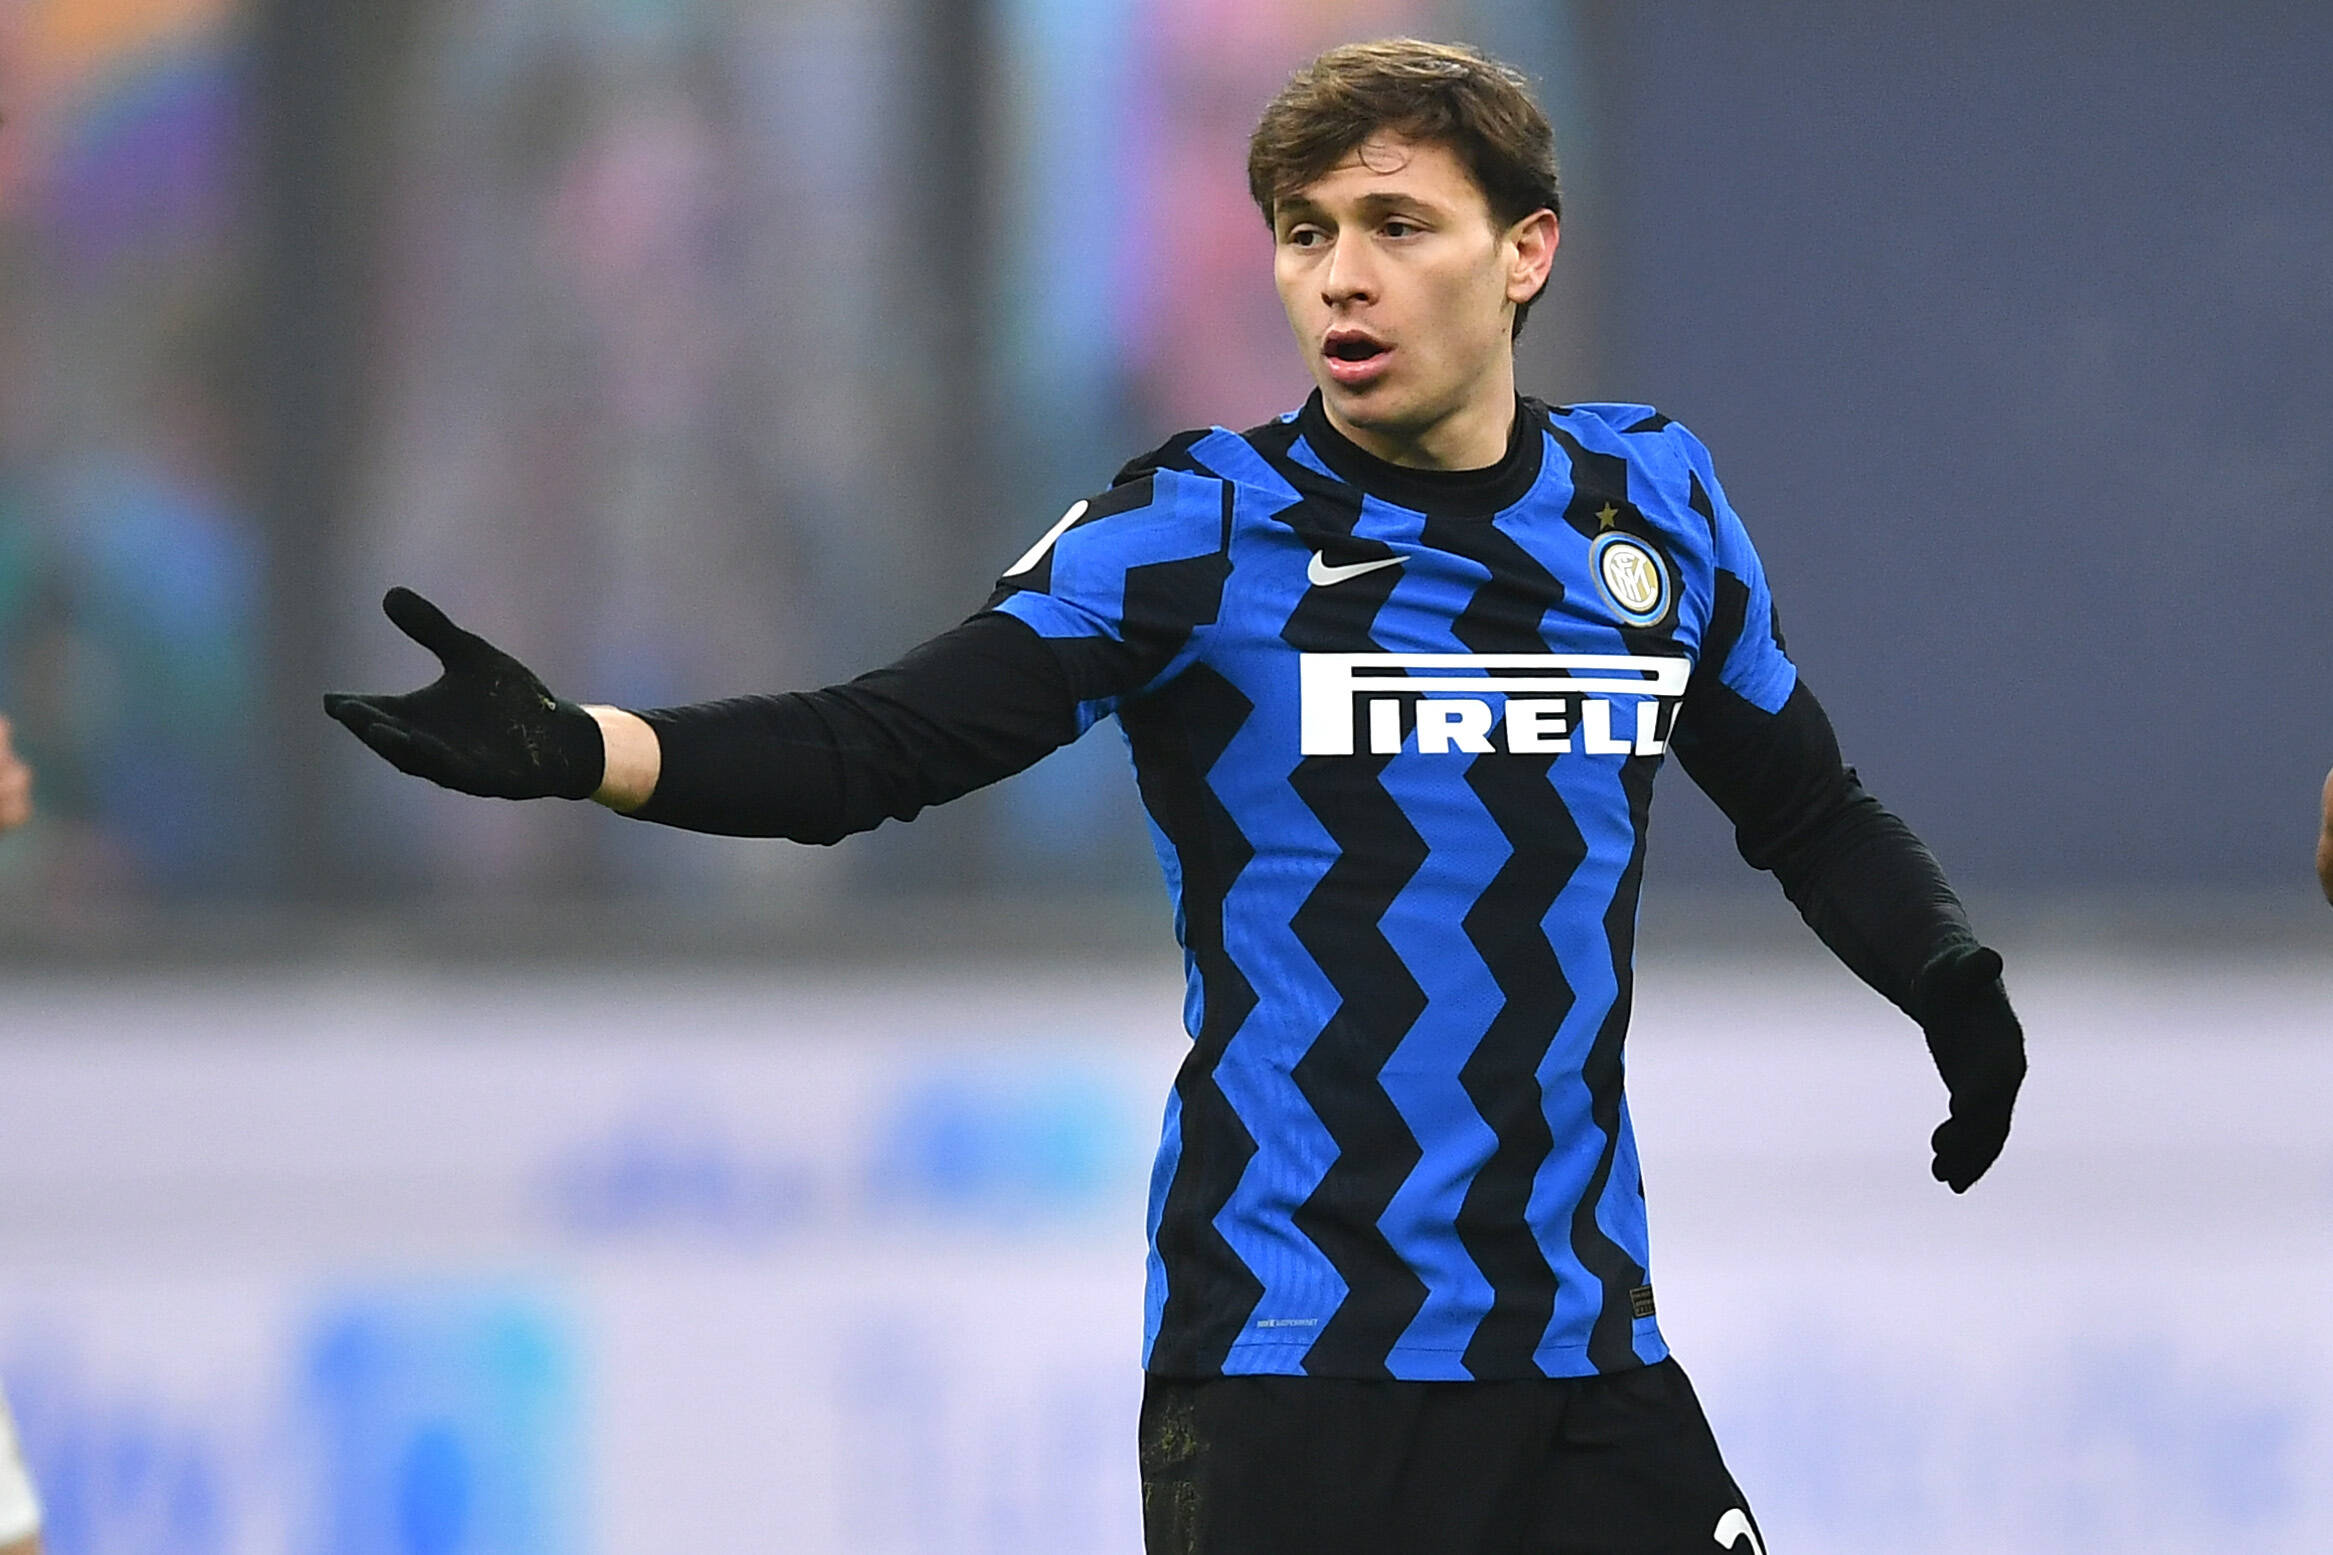 Inter Want At Least €25M From Pirelli’s Replacement As Nerazzurri Shirt Sponsor, Italian Media Report